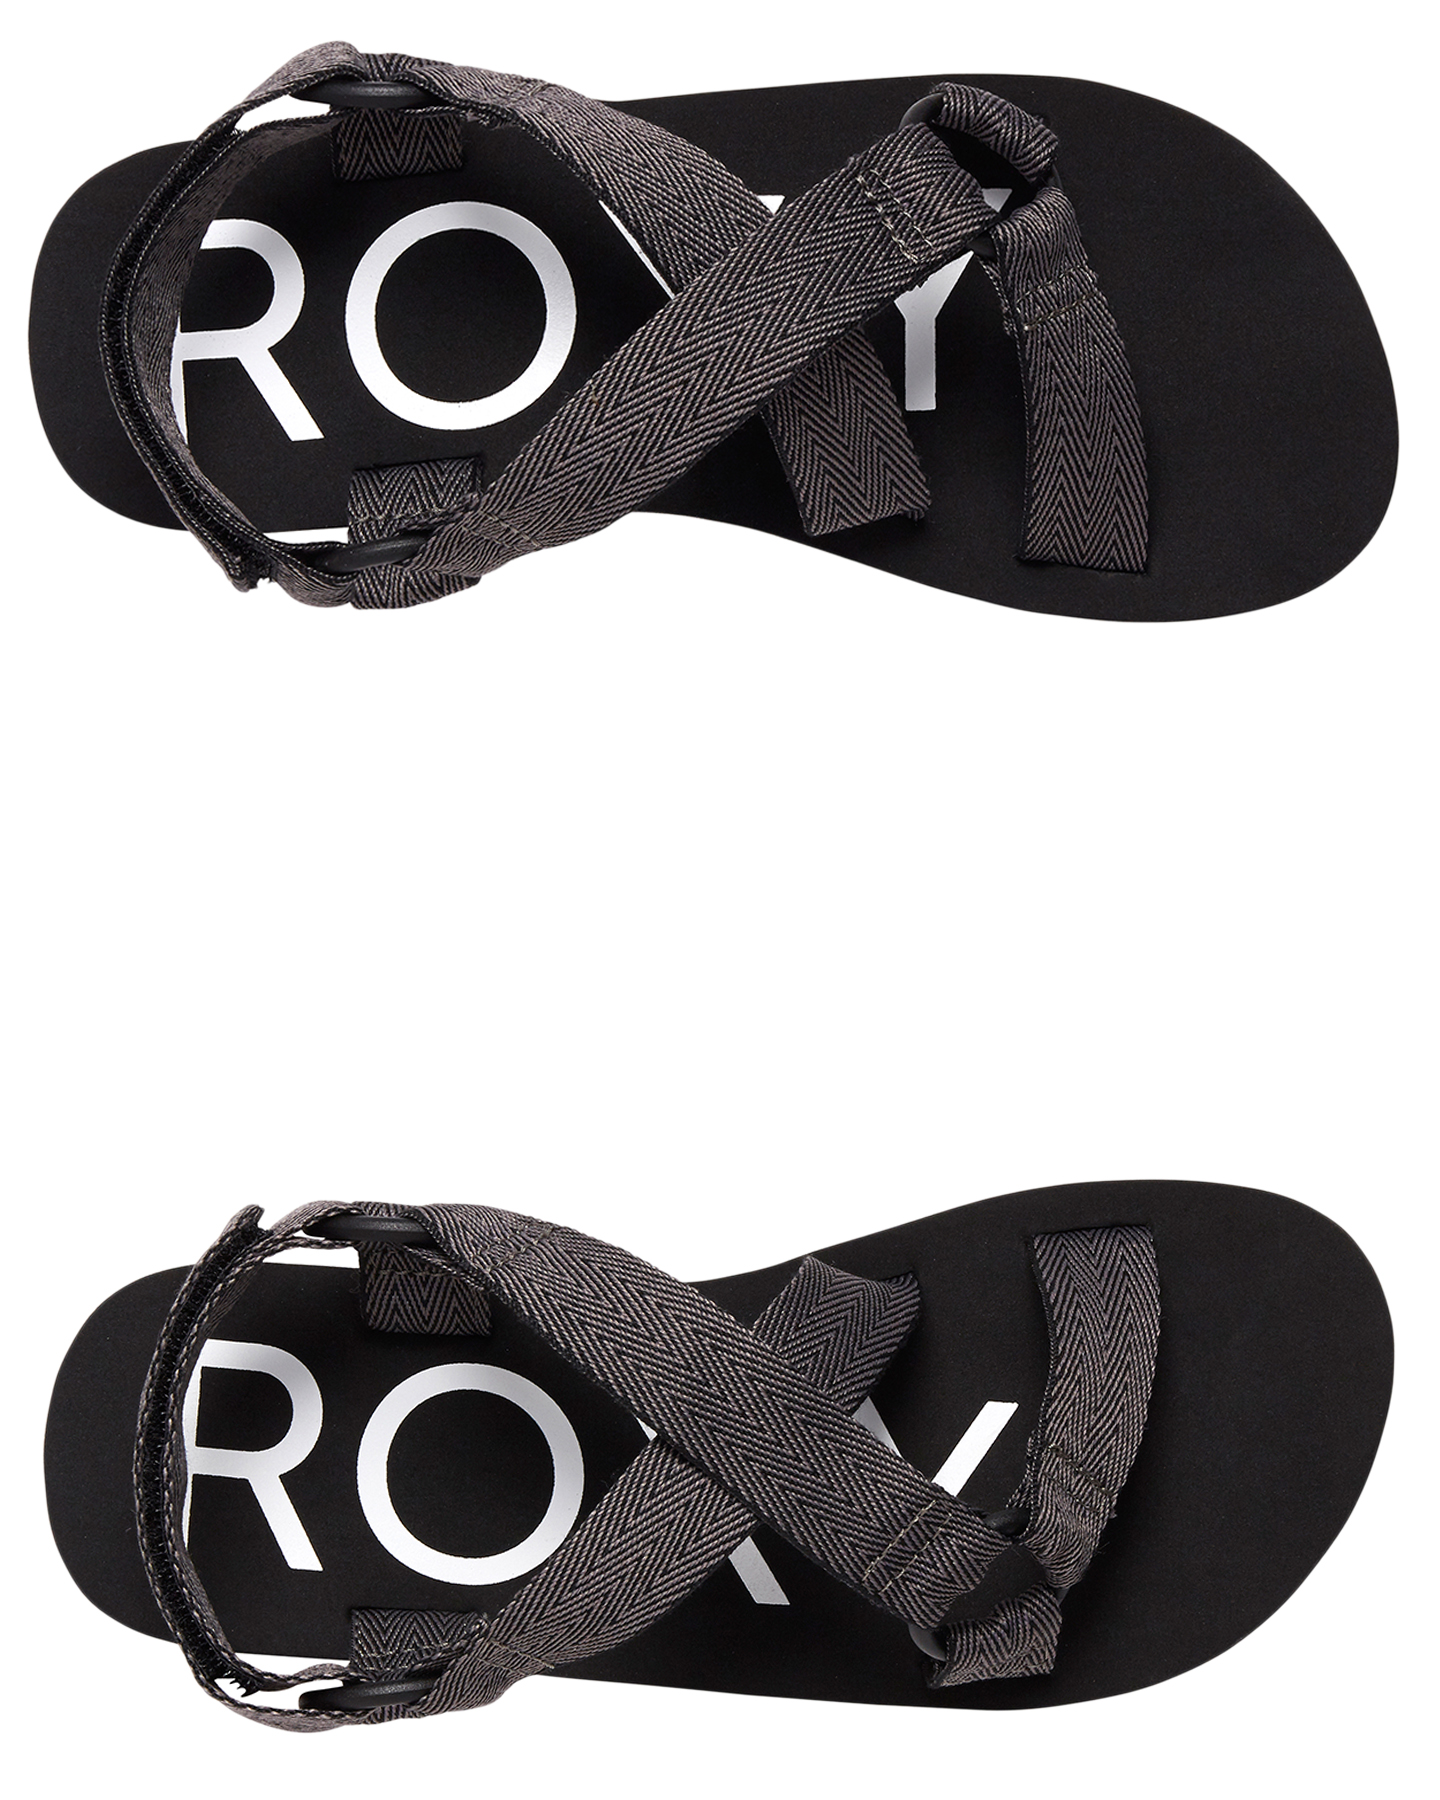 roxy flip flops canada